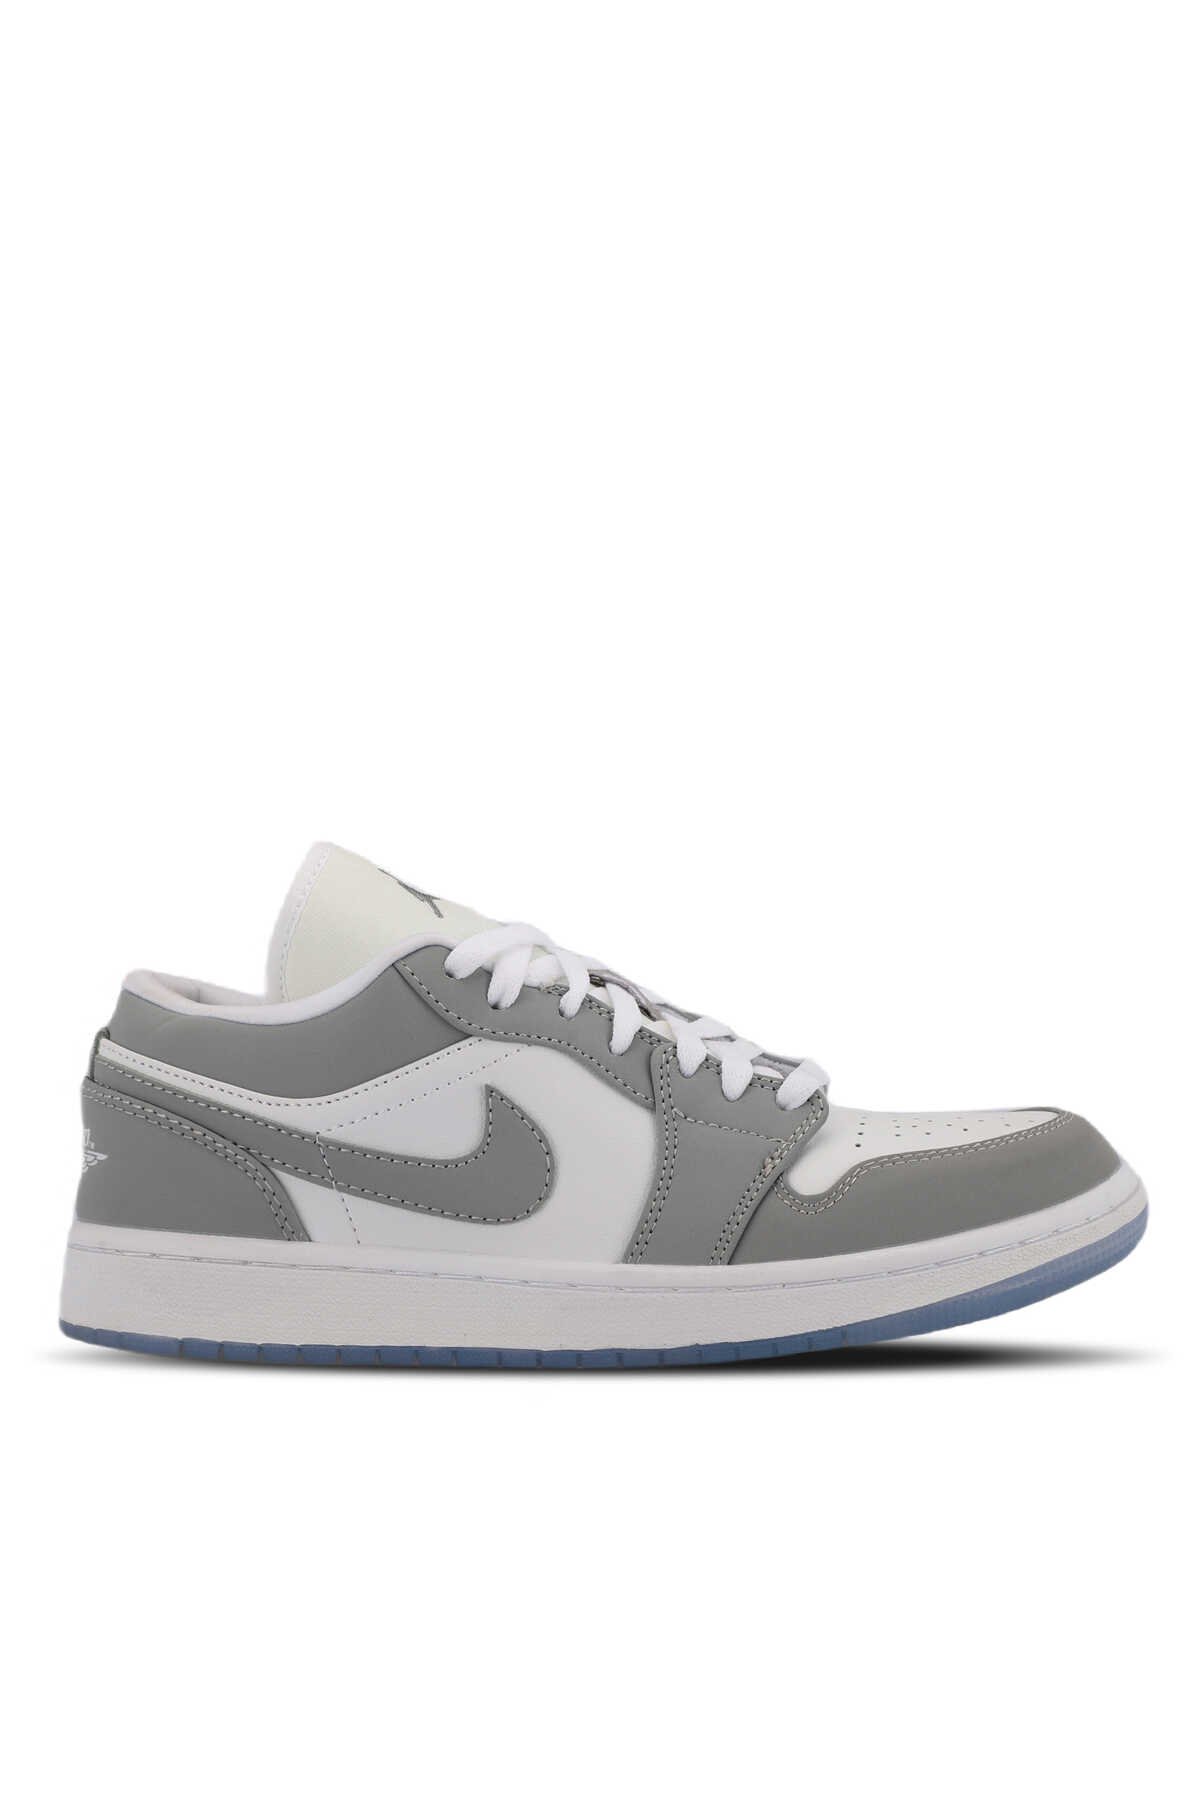 Nike - Nike AIR JORDON 1 LOW Sneaker Erkek Ayakkabı Beyaz / Gri